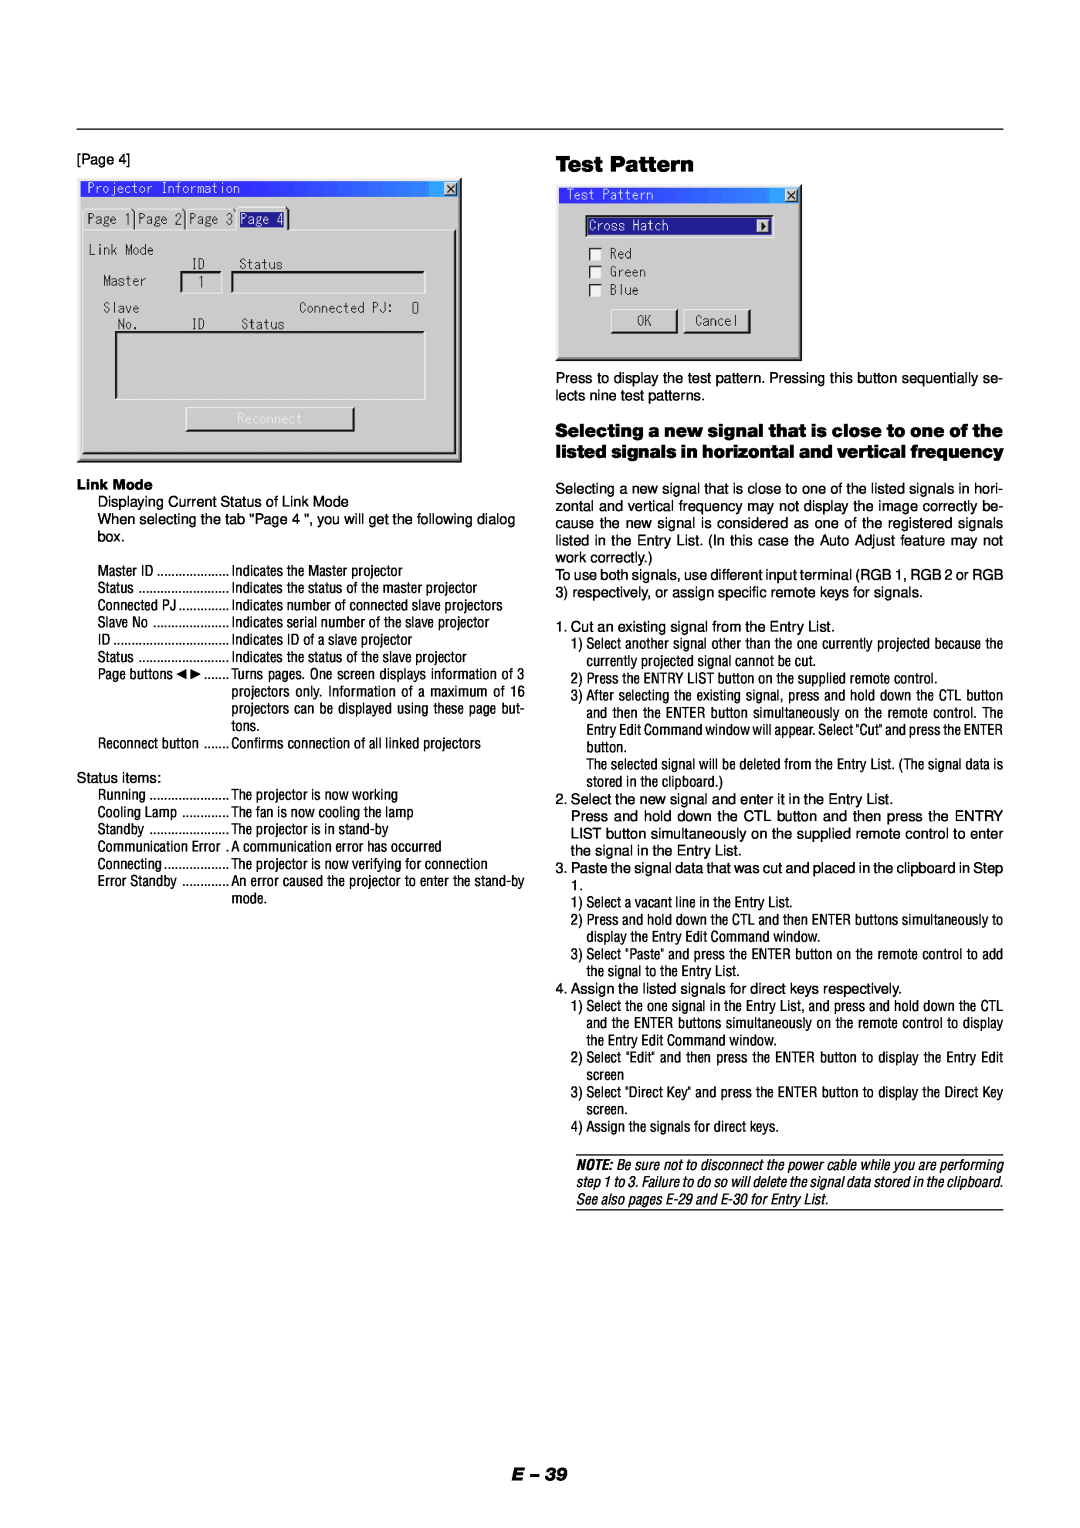 NEC XT9000 user manual Test Pattern, Link Mode 